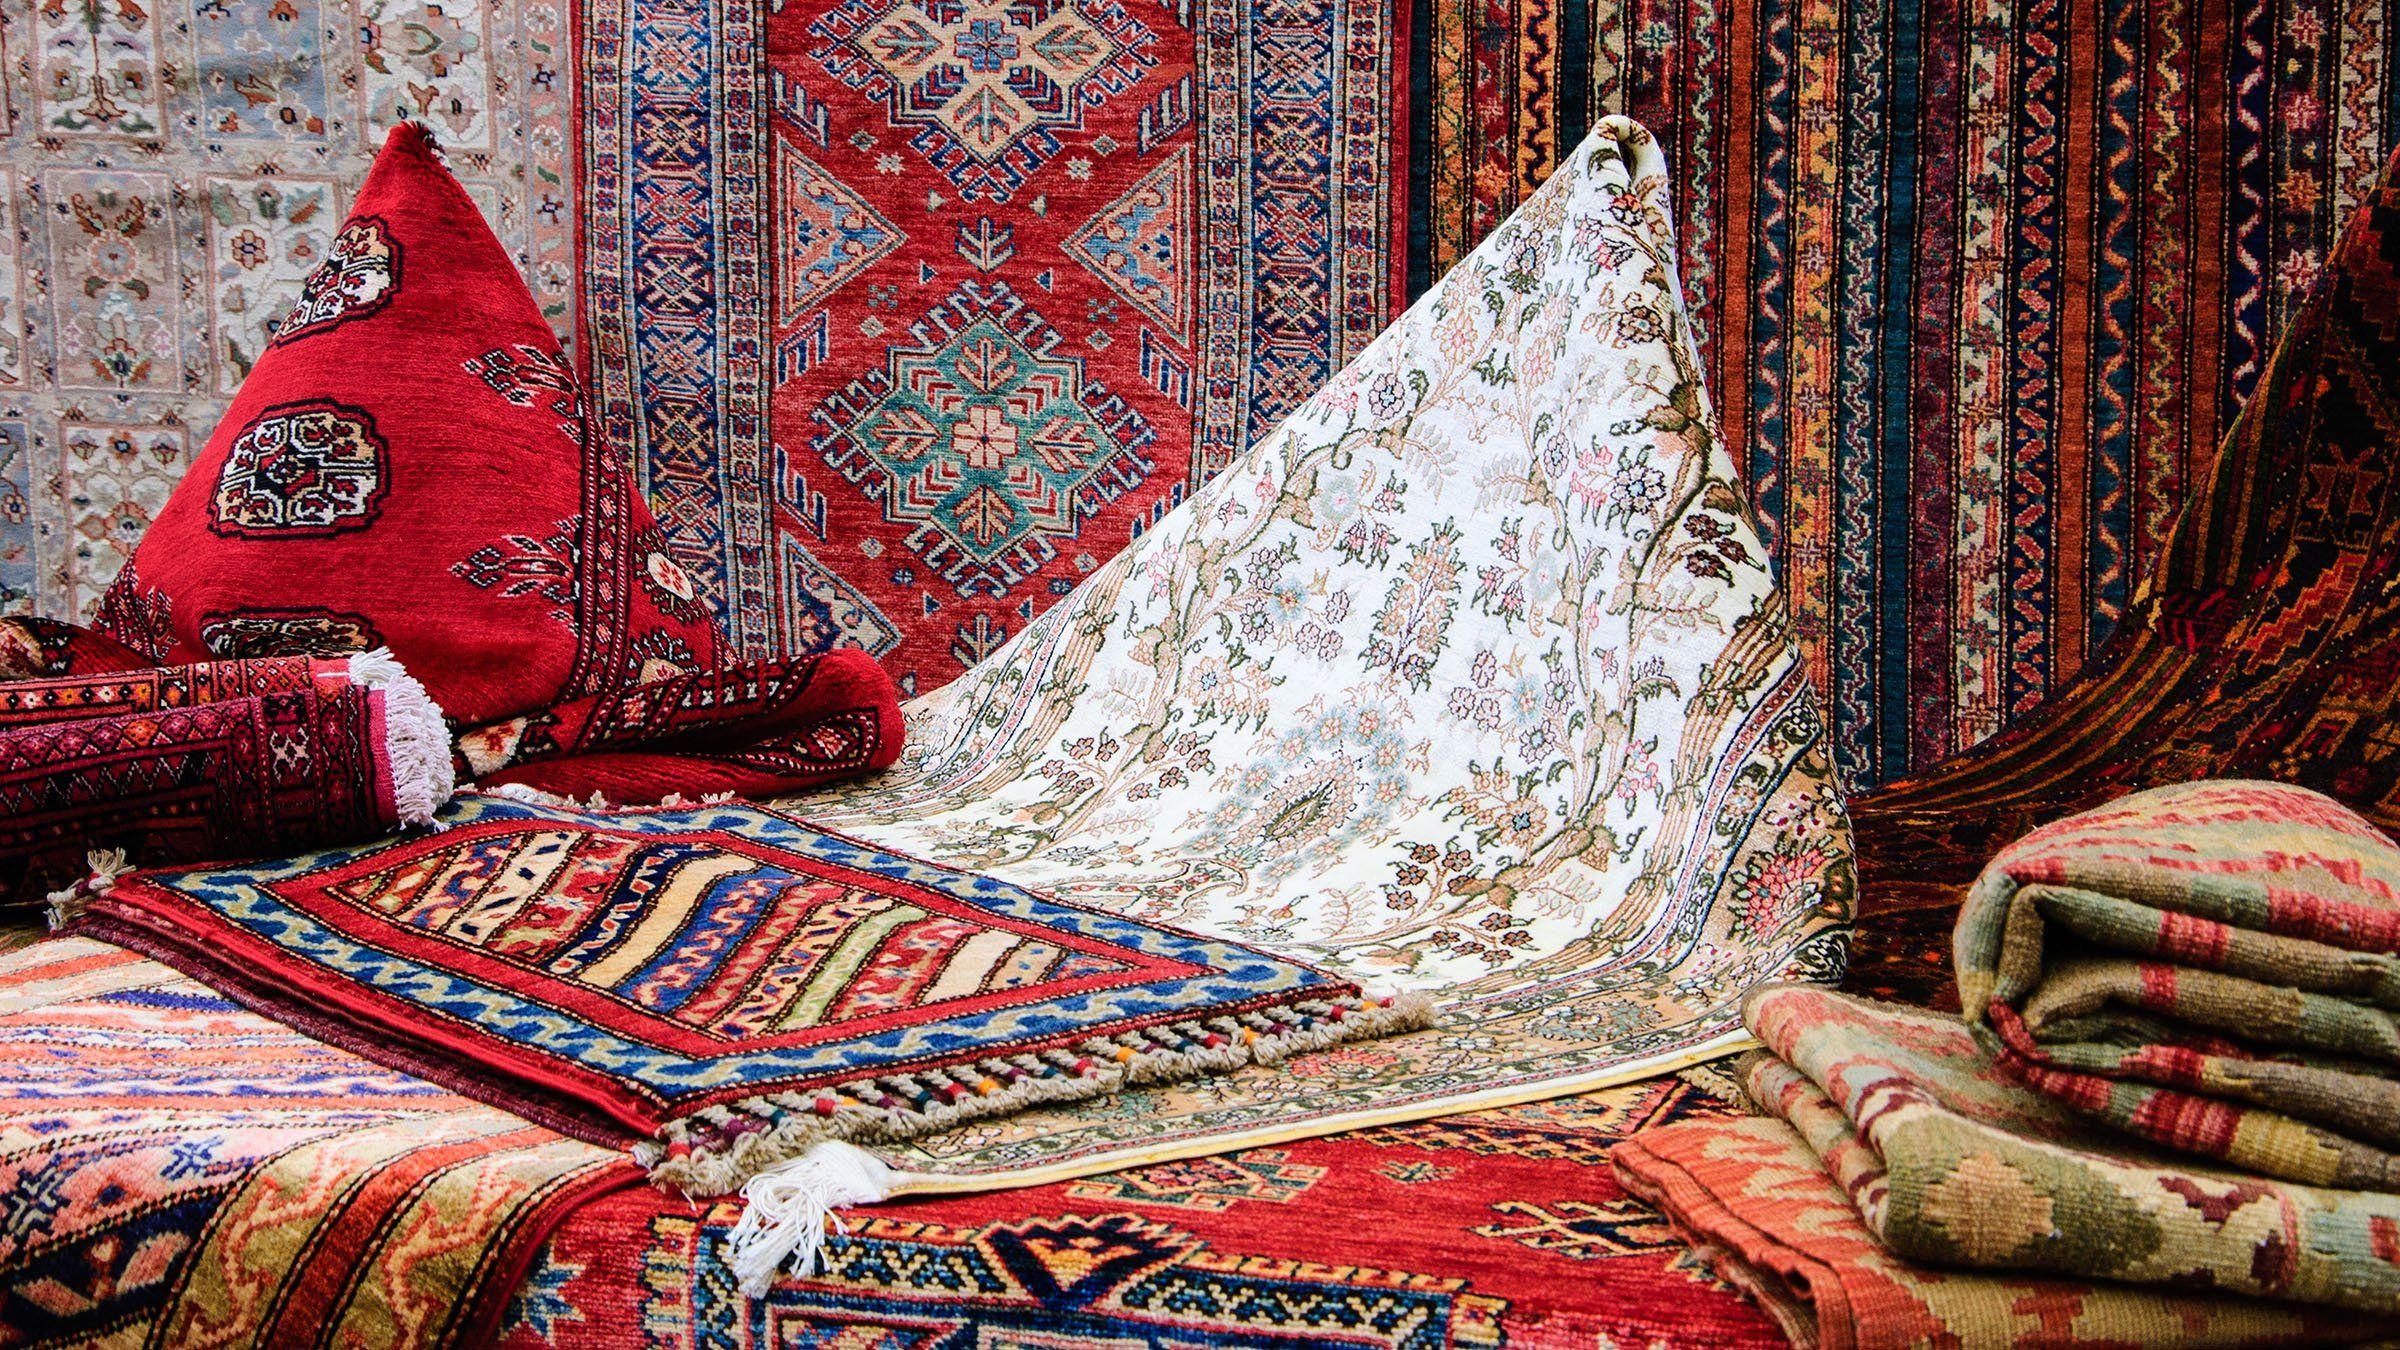 Shavkat Mirziyoyev has put forward important initiatives for the development of the silk and carpet industry in Uzbekistan